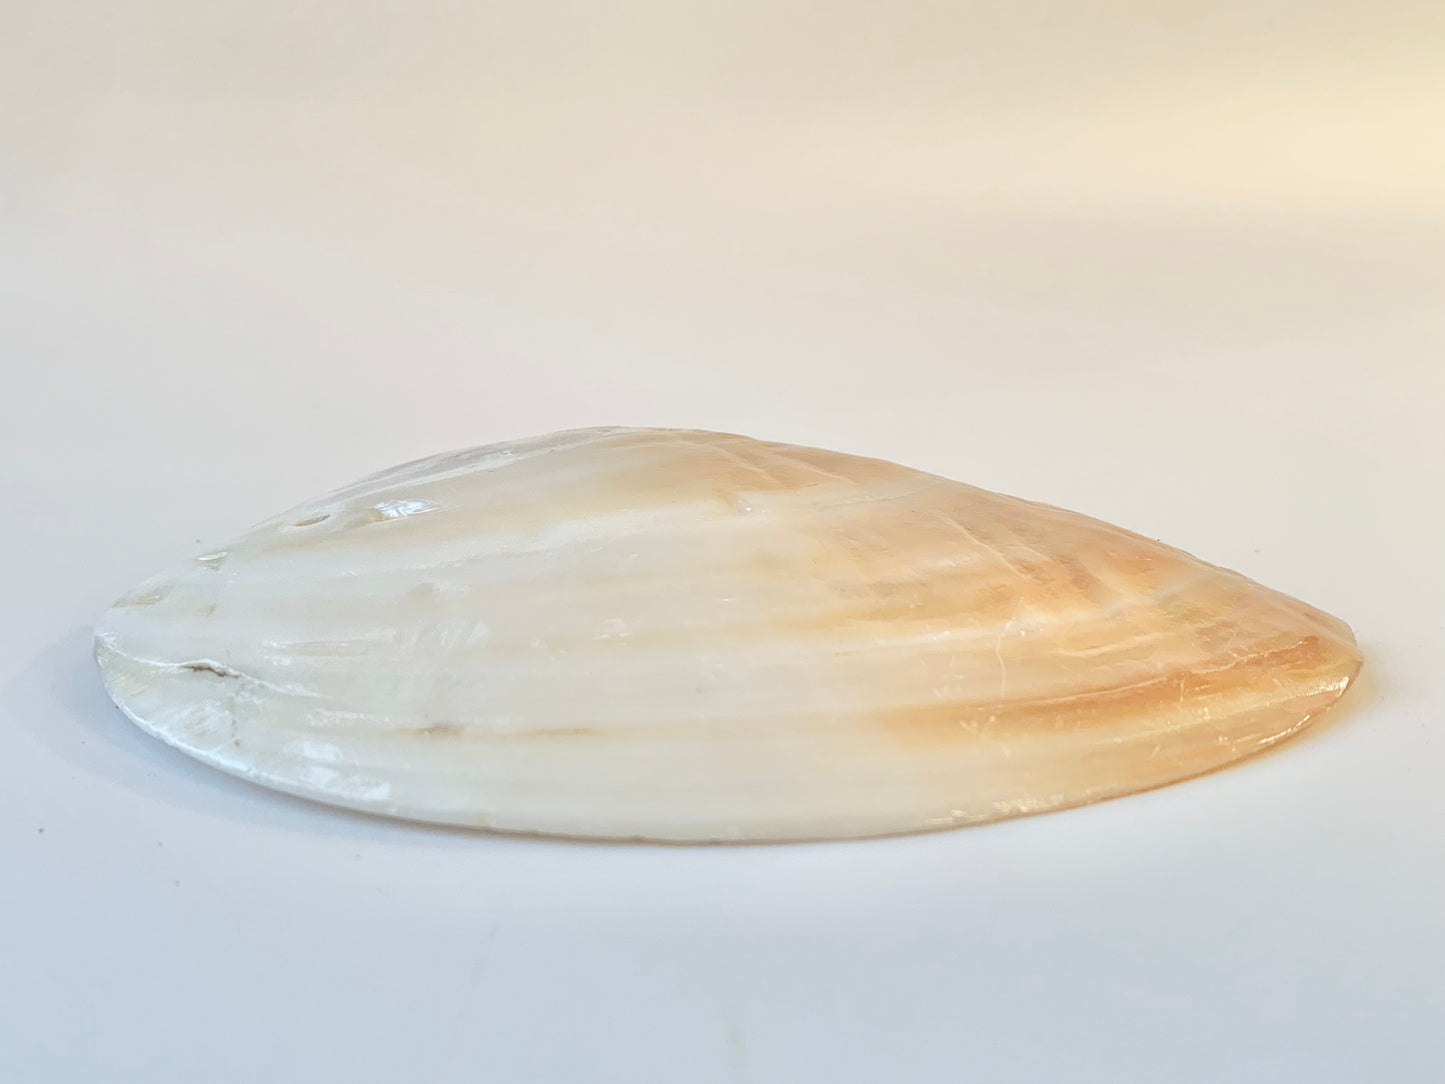 Blister pearl shell